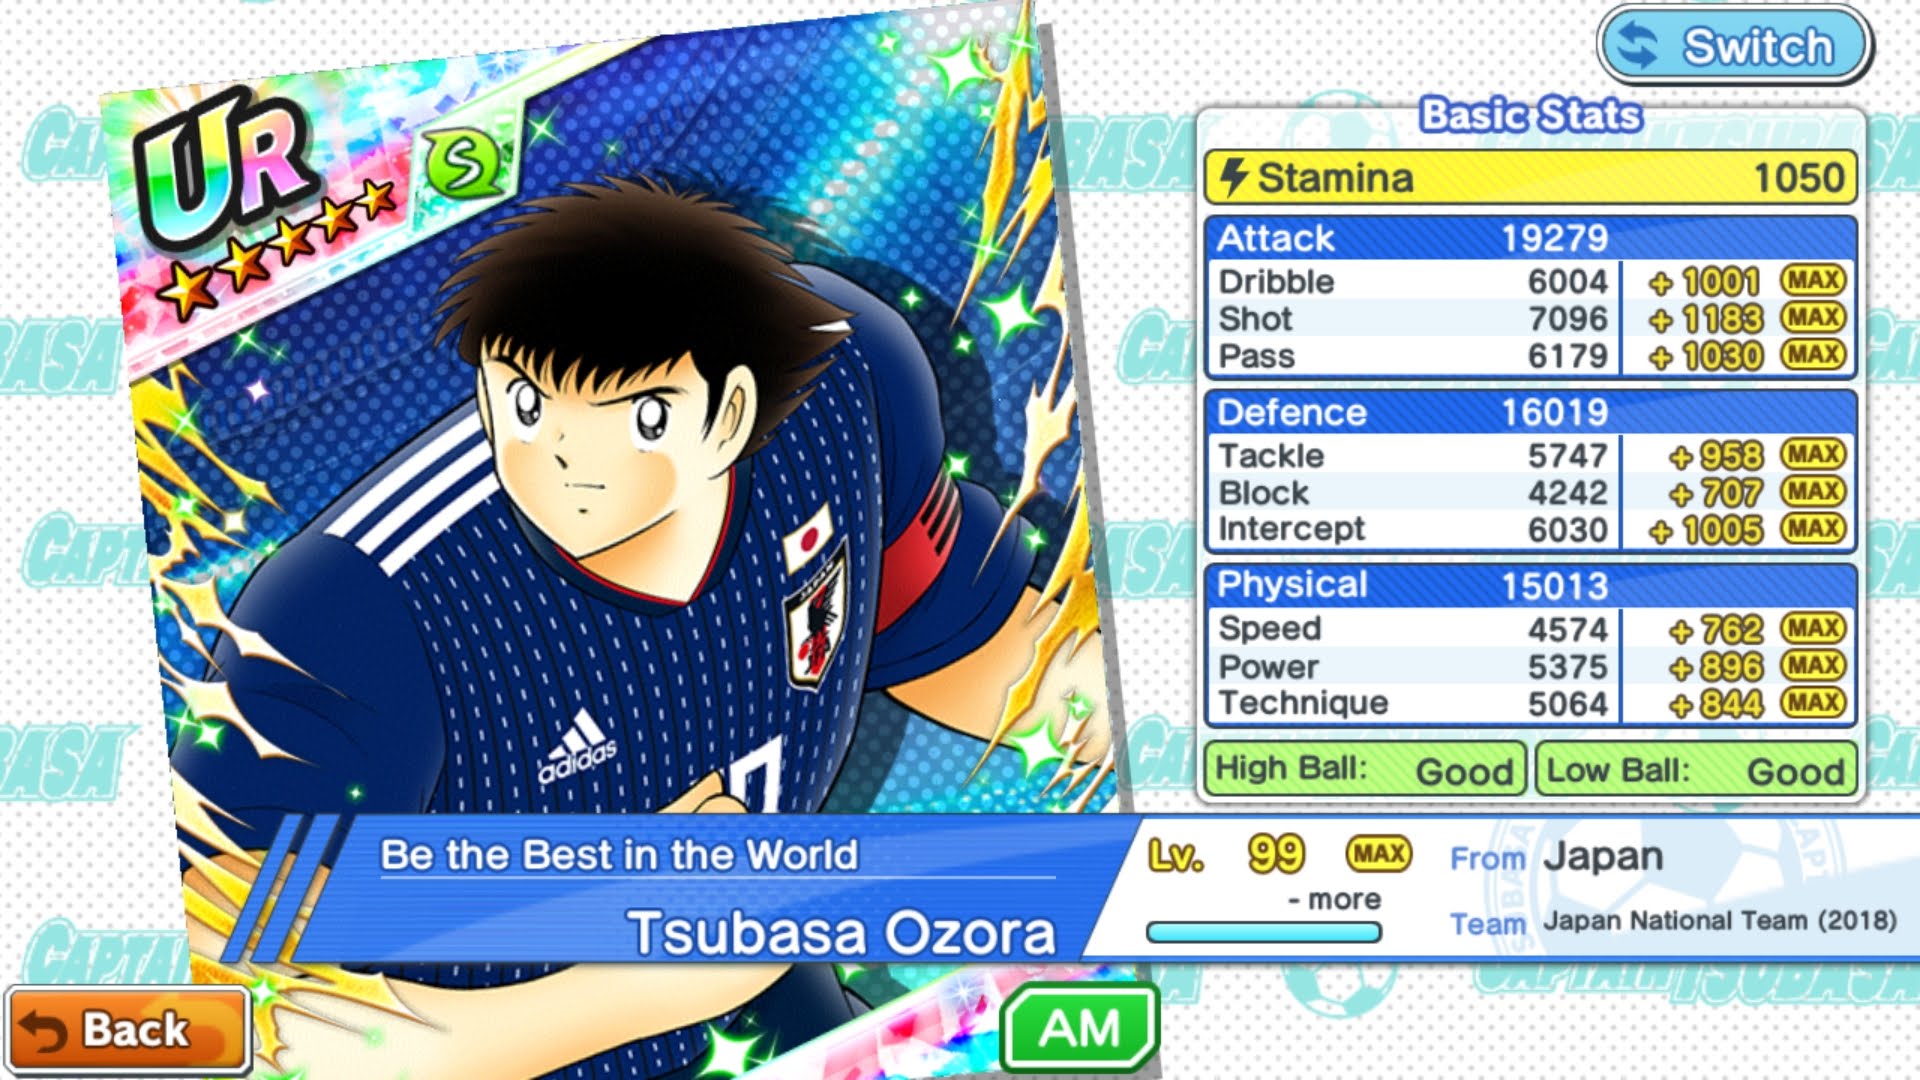 Captain Tsubasa: Dream Team - Tuyển Nhật phiên bản World Cup 2018 đáng sợ ra sao?